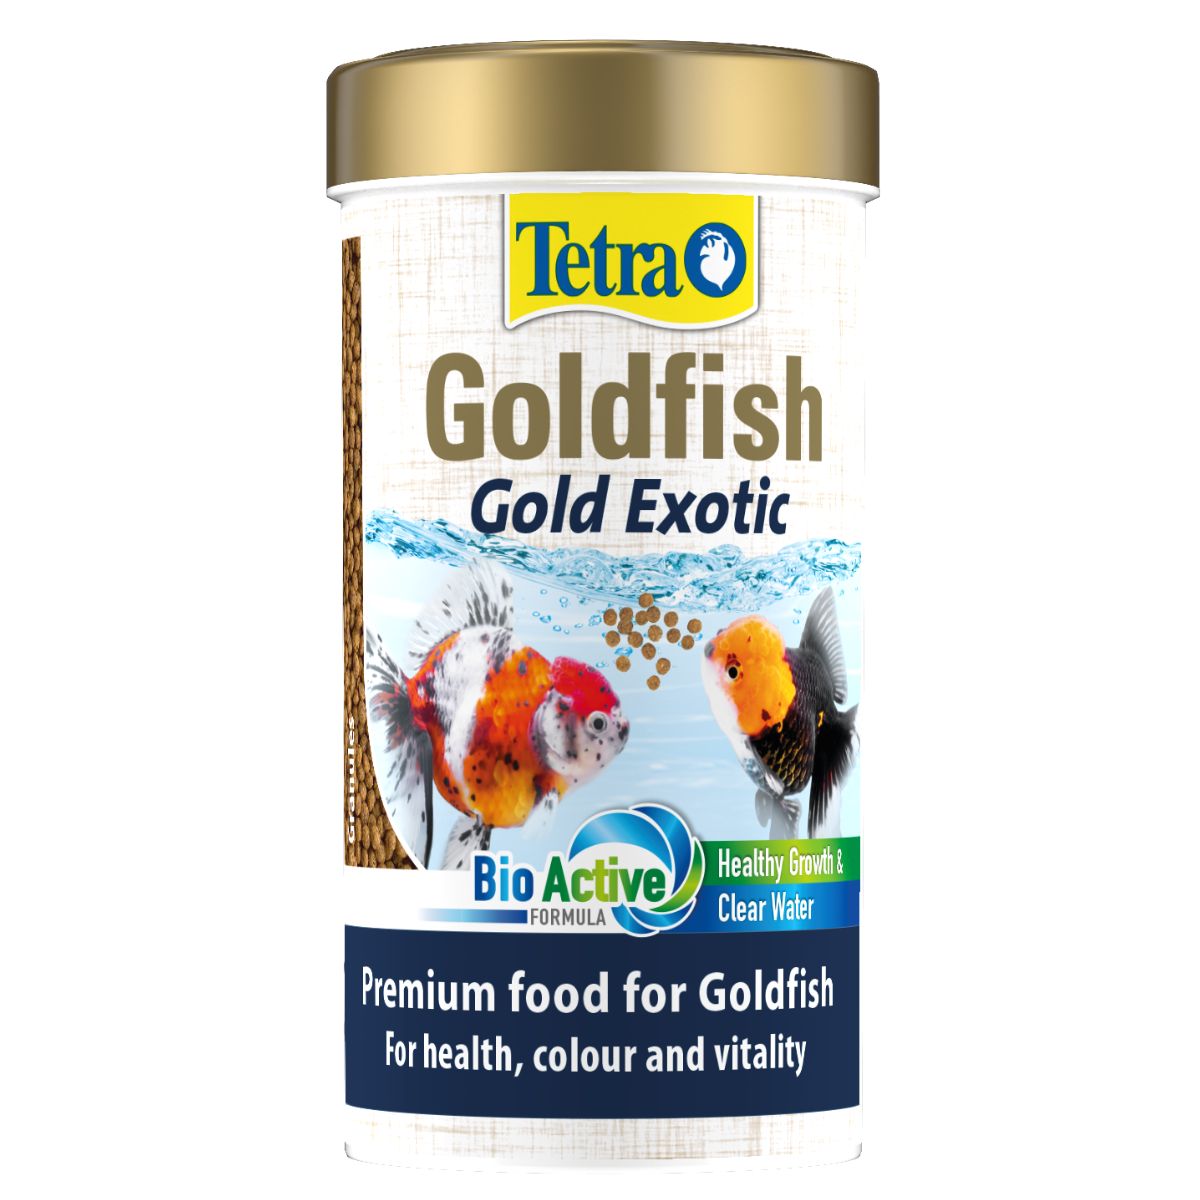 Tetra Goldfish Gold Exotic Premium Food For Goldfish For Health, Colour &  Vitality Bio Active Formula 80 Gram Pack - Orange Pet Nutrition